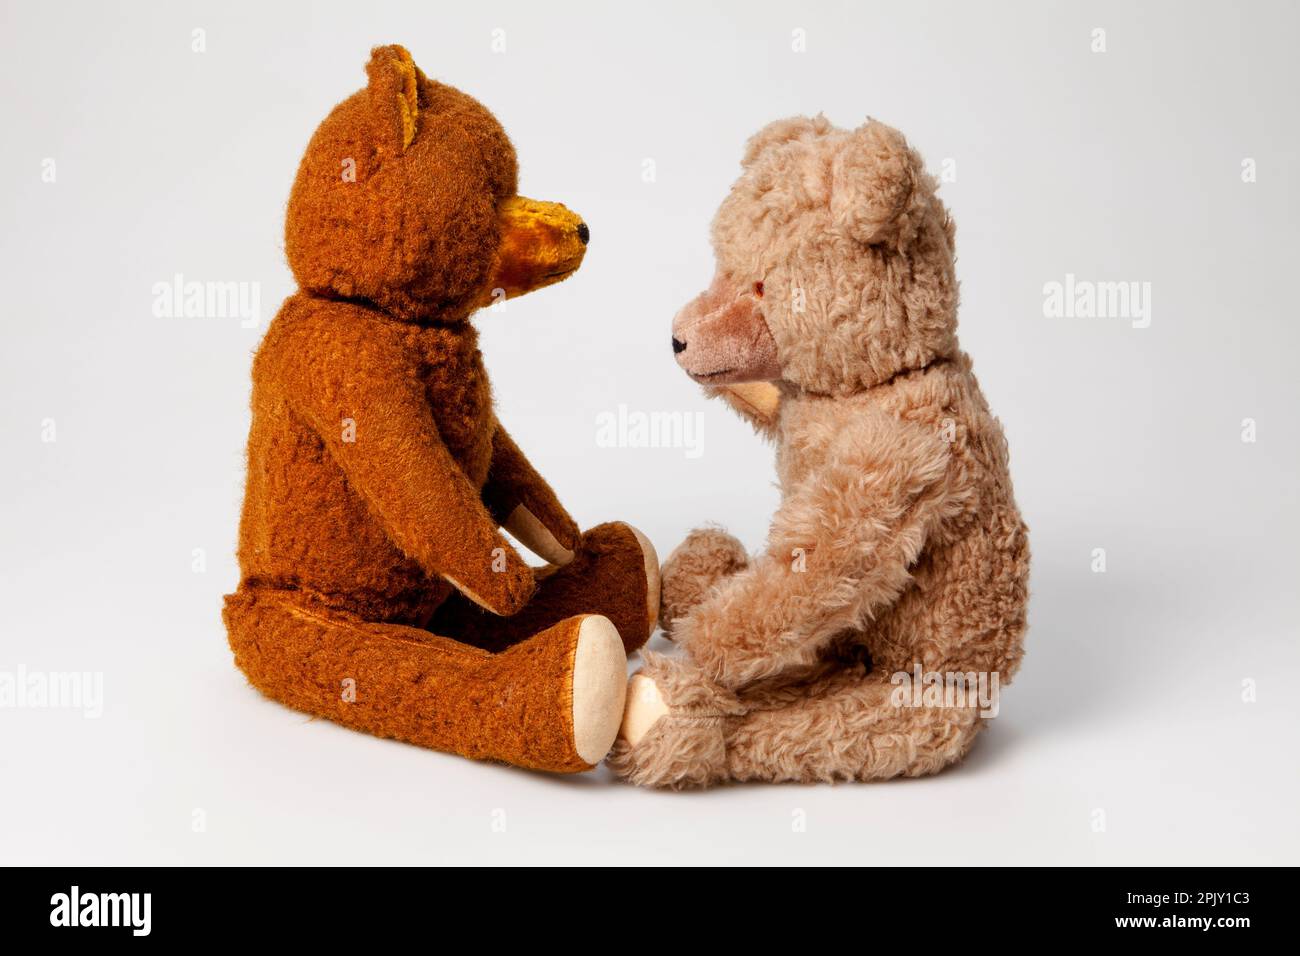 Two teddy bears Stock Photo